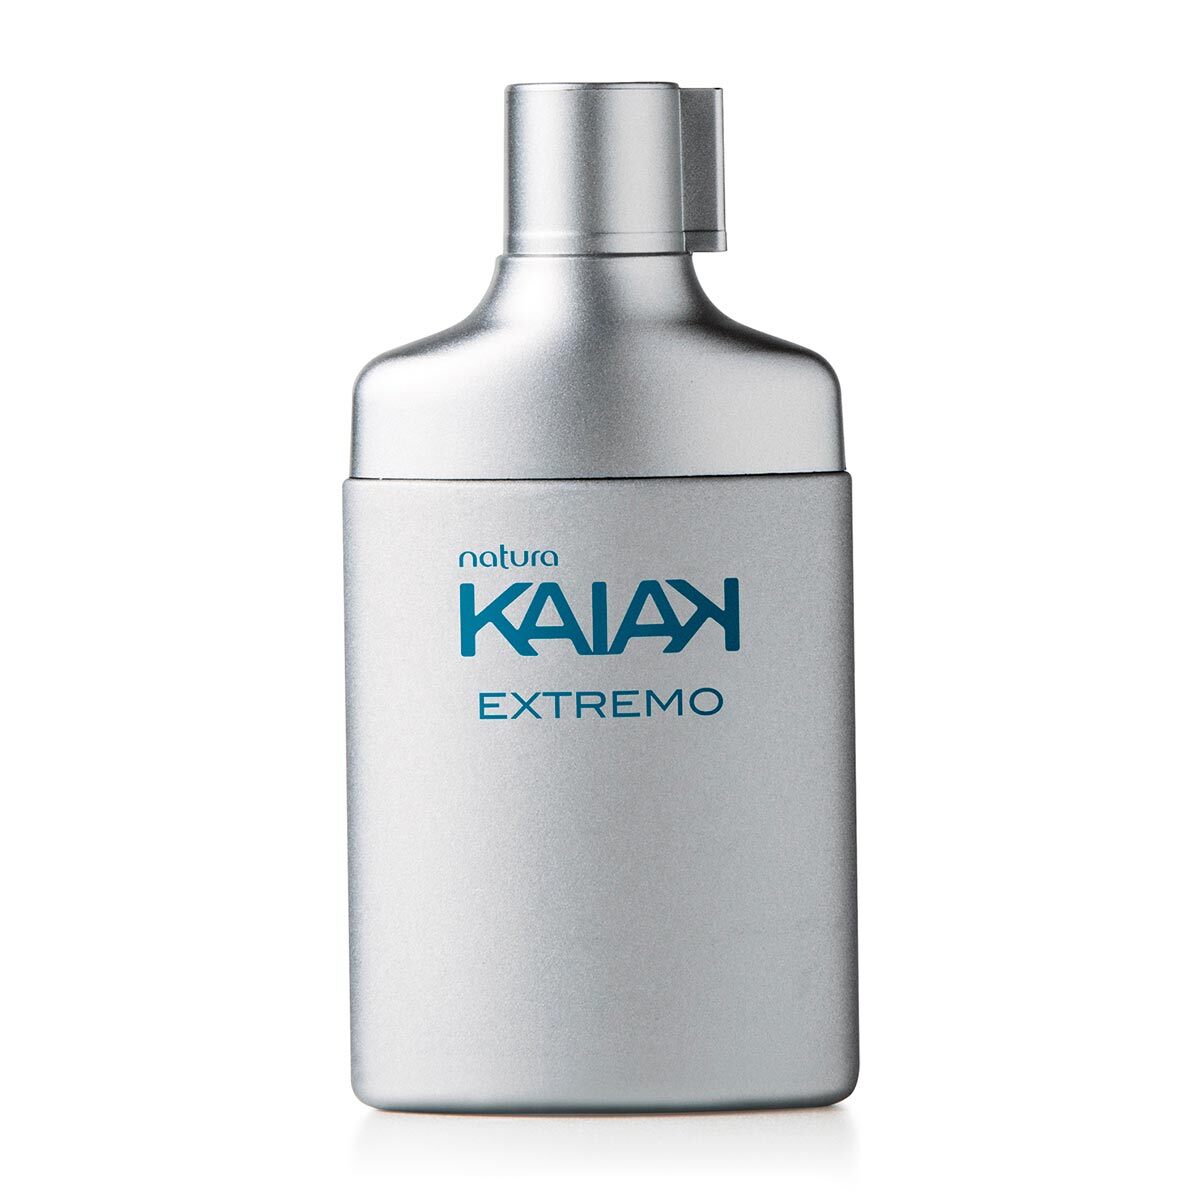 Natura KAIAK Miniatura Extremo / Miniature Extreme Deodorant Cologne - —  Supermarket Brazil